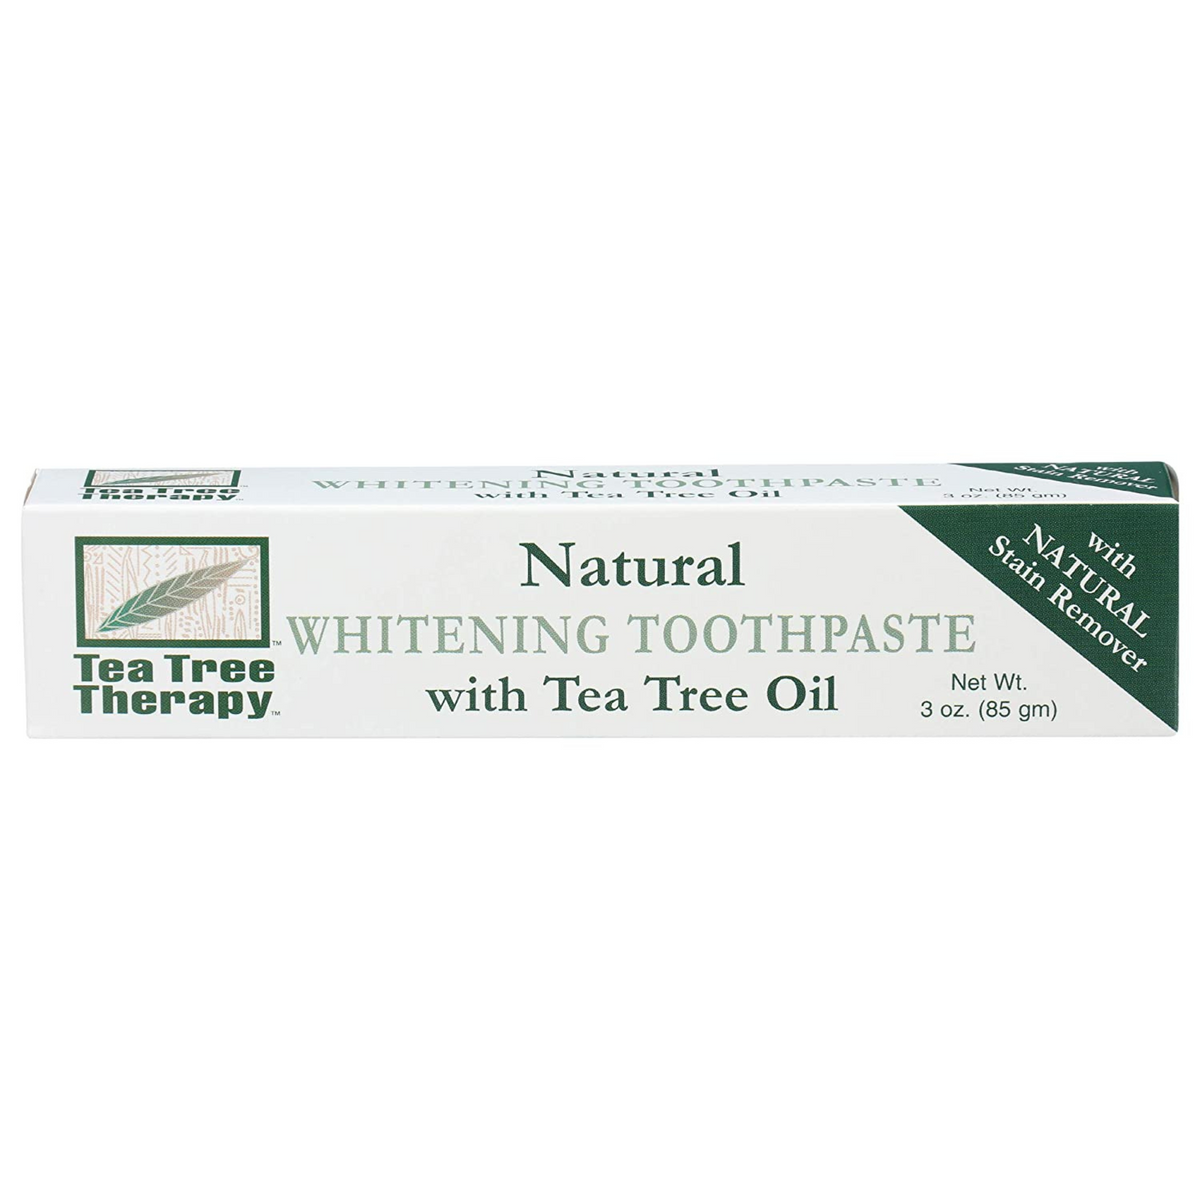 Primary Image of Tea Tree Therapy Tea Tree Toothpaste with Baking Soda (5 oz)